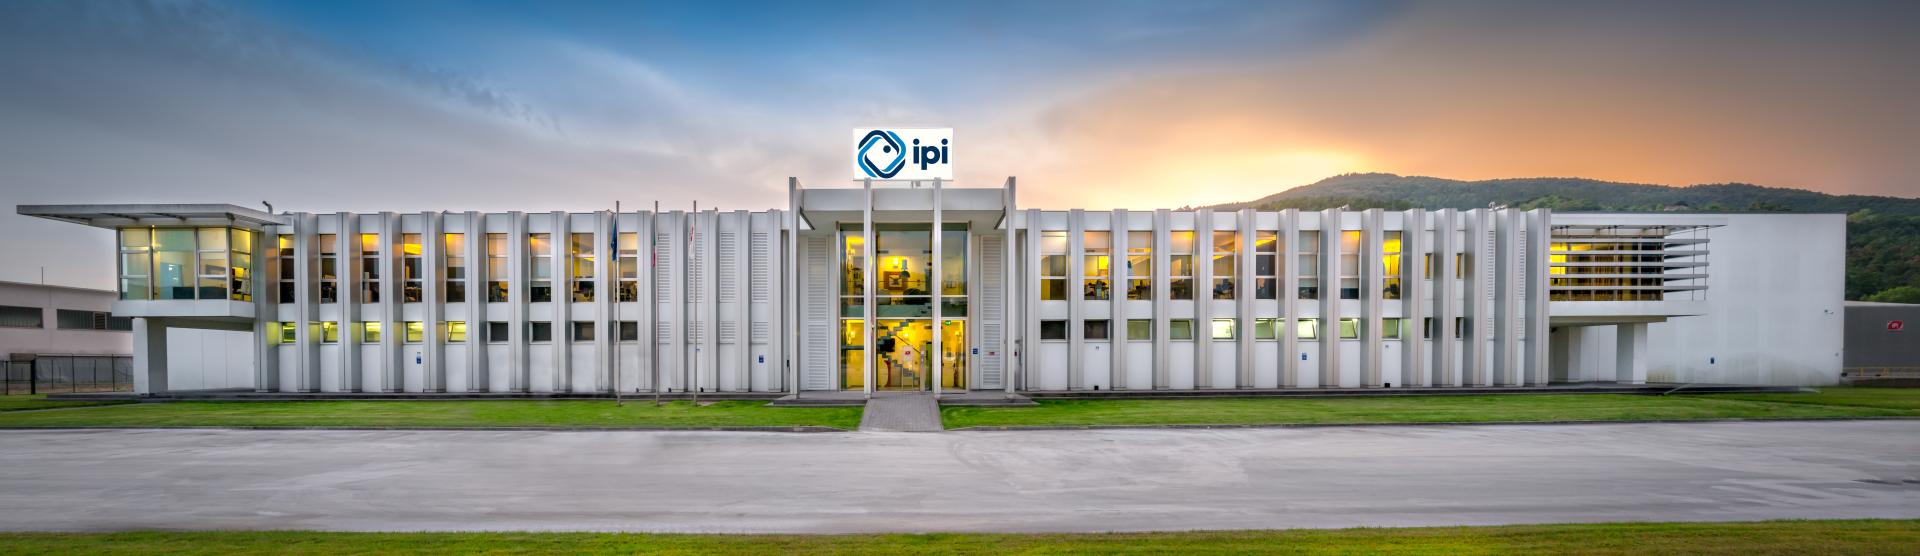 IPI, oltre 40 anni di successi